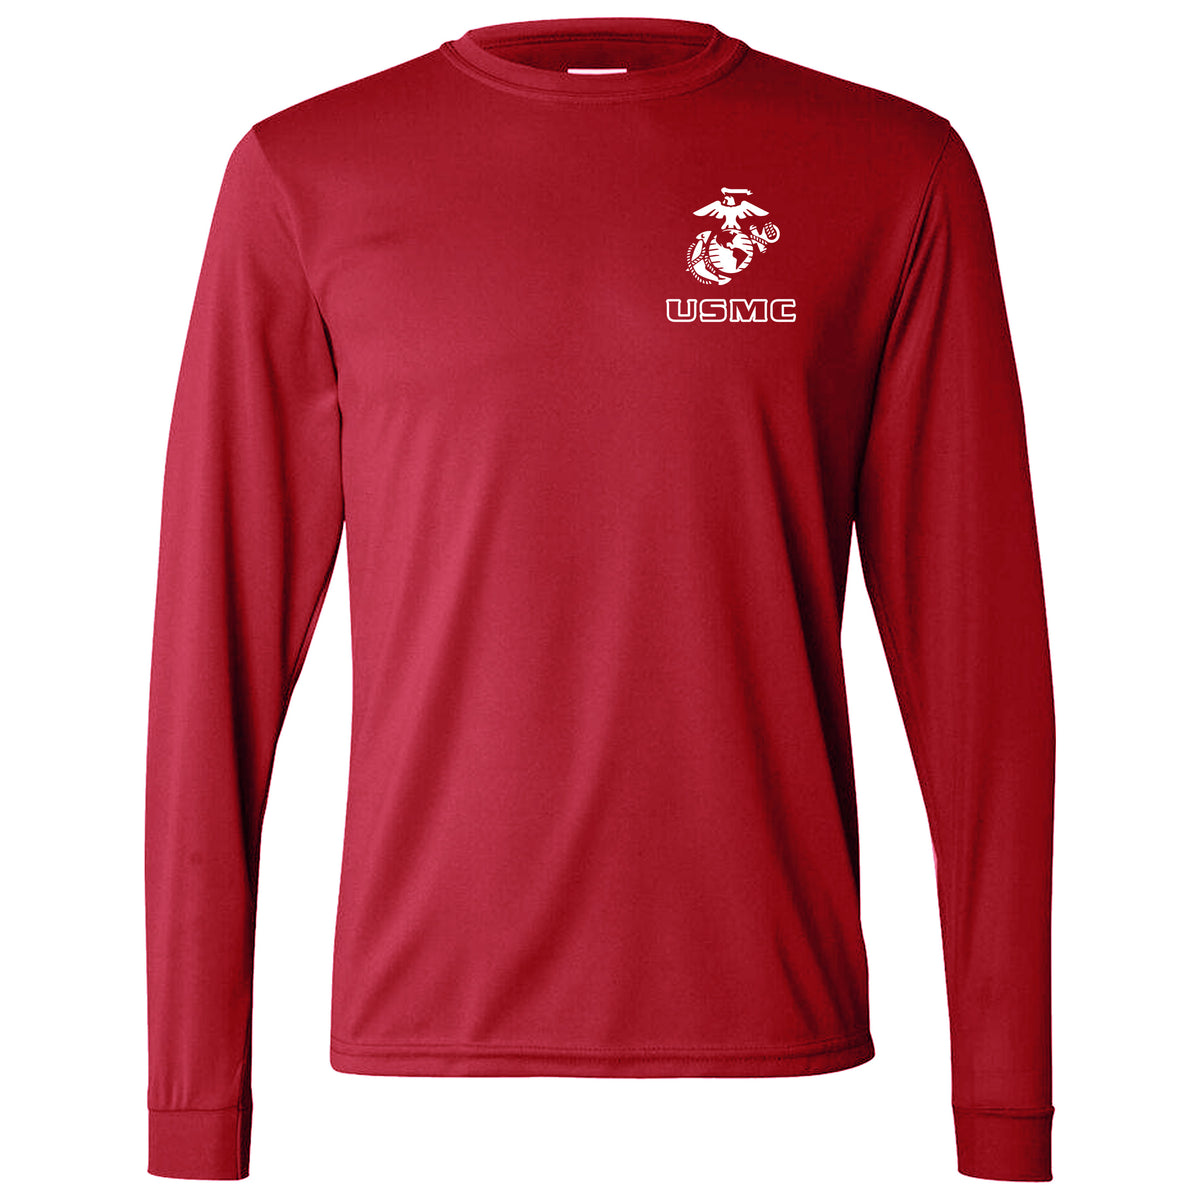 EGA Over USMC Chest Seal Dri-Fit Performance Long Sleeve T-Shirt